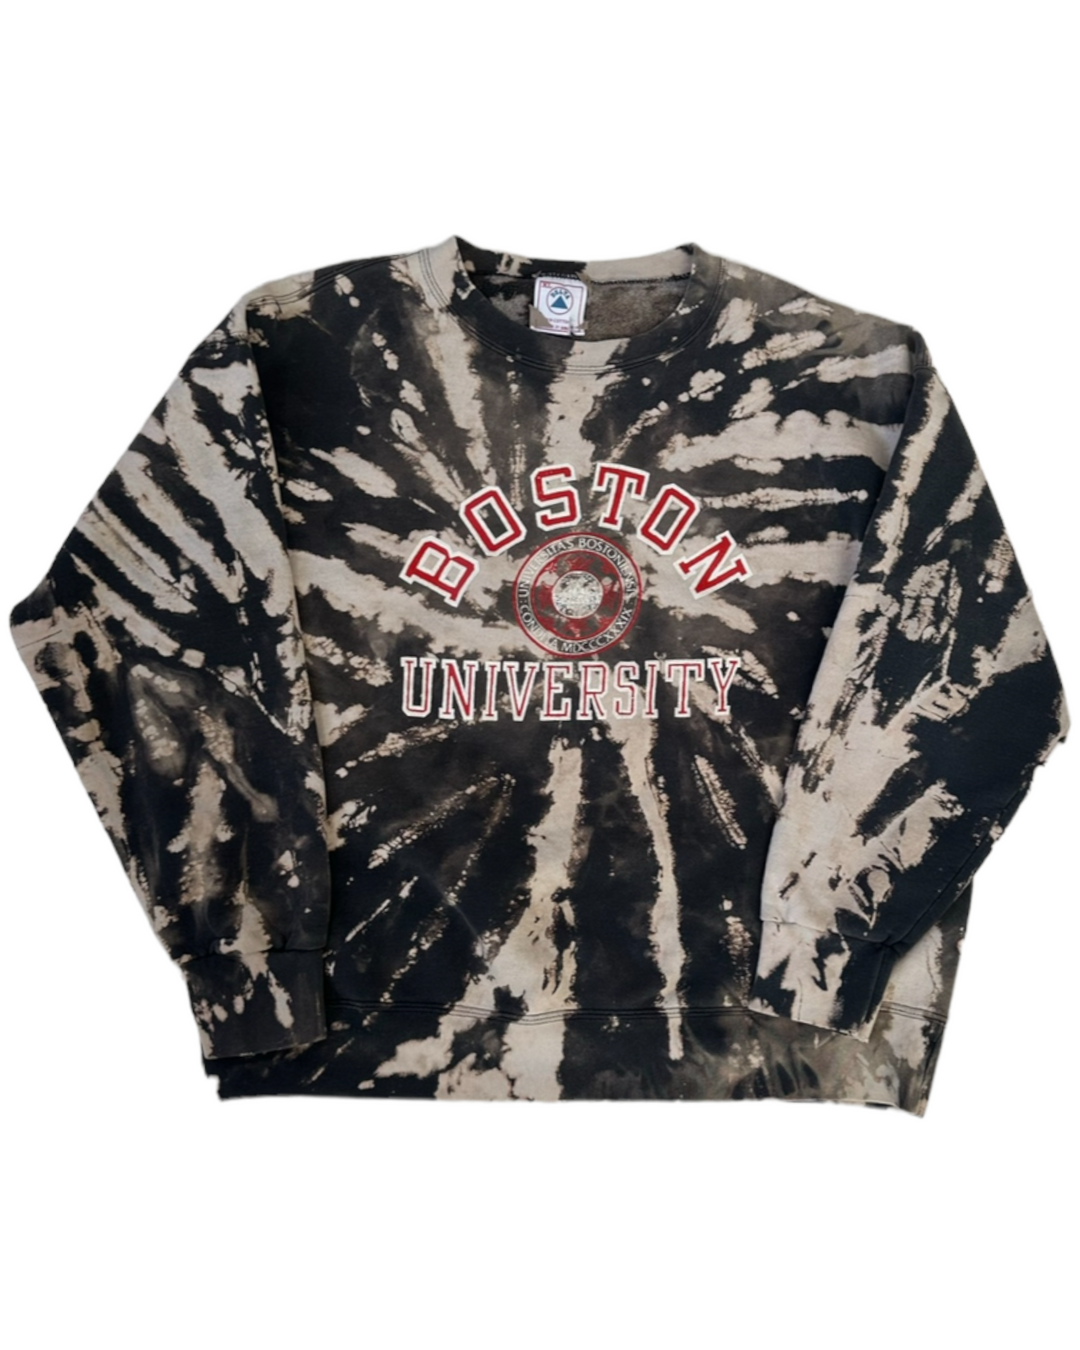 Boston University Reworked Vintage Sweatshirt